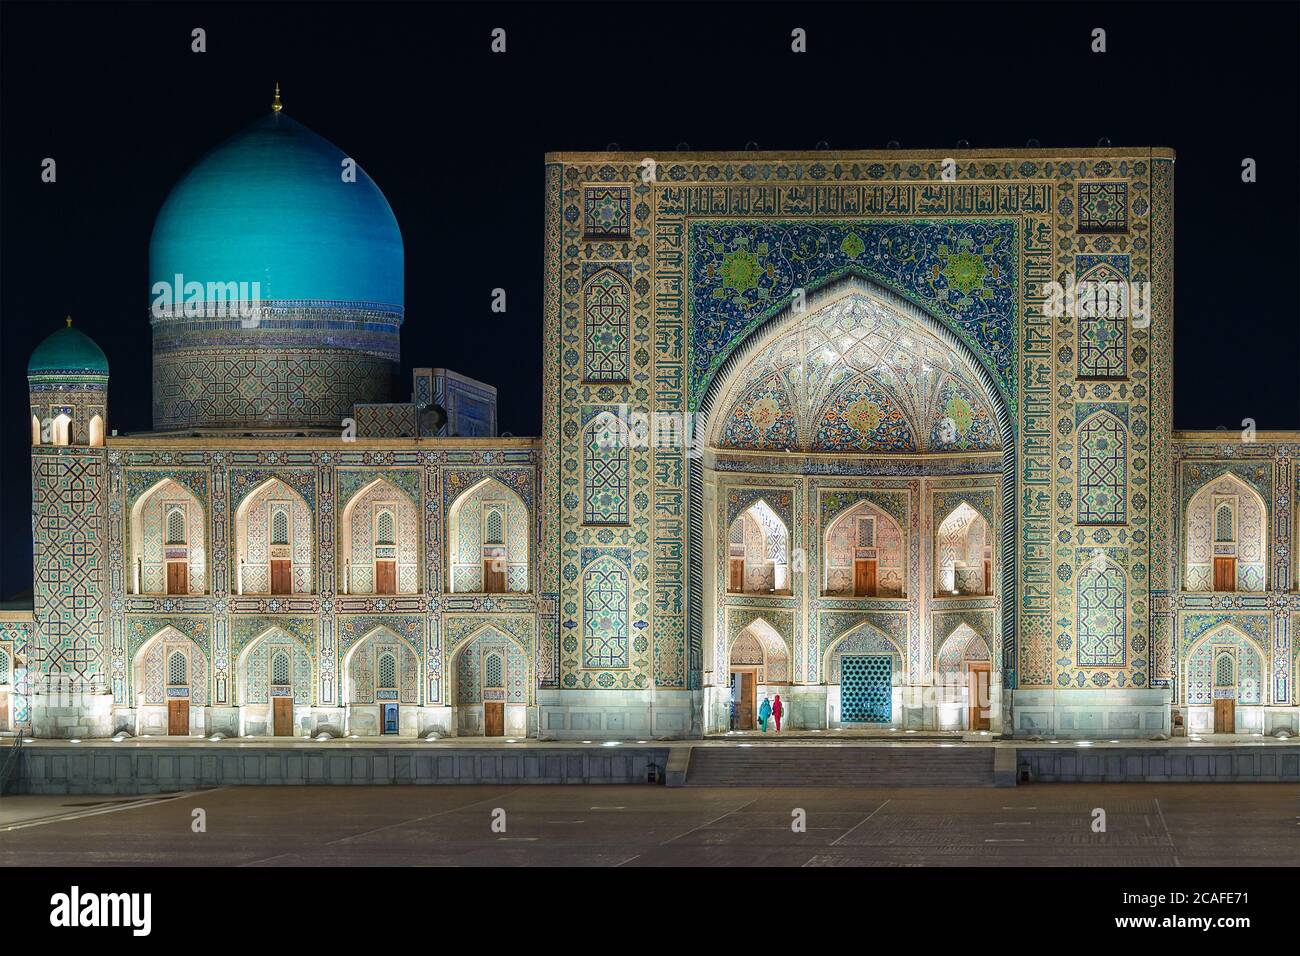 Tilya Kori Madrasa et mosquée avec dôme bleu et pishtaq ornementé la nuit. Madrasah Tilya Kari avec iwan et coupole cyan à Samarkand, Ouzbékistan. Banque D'Images